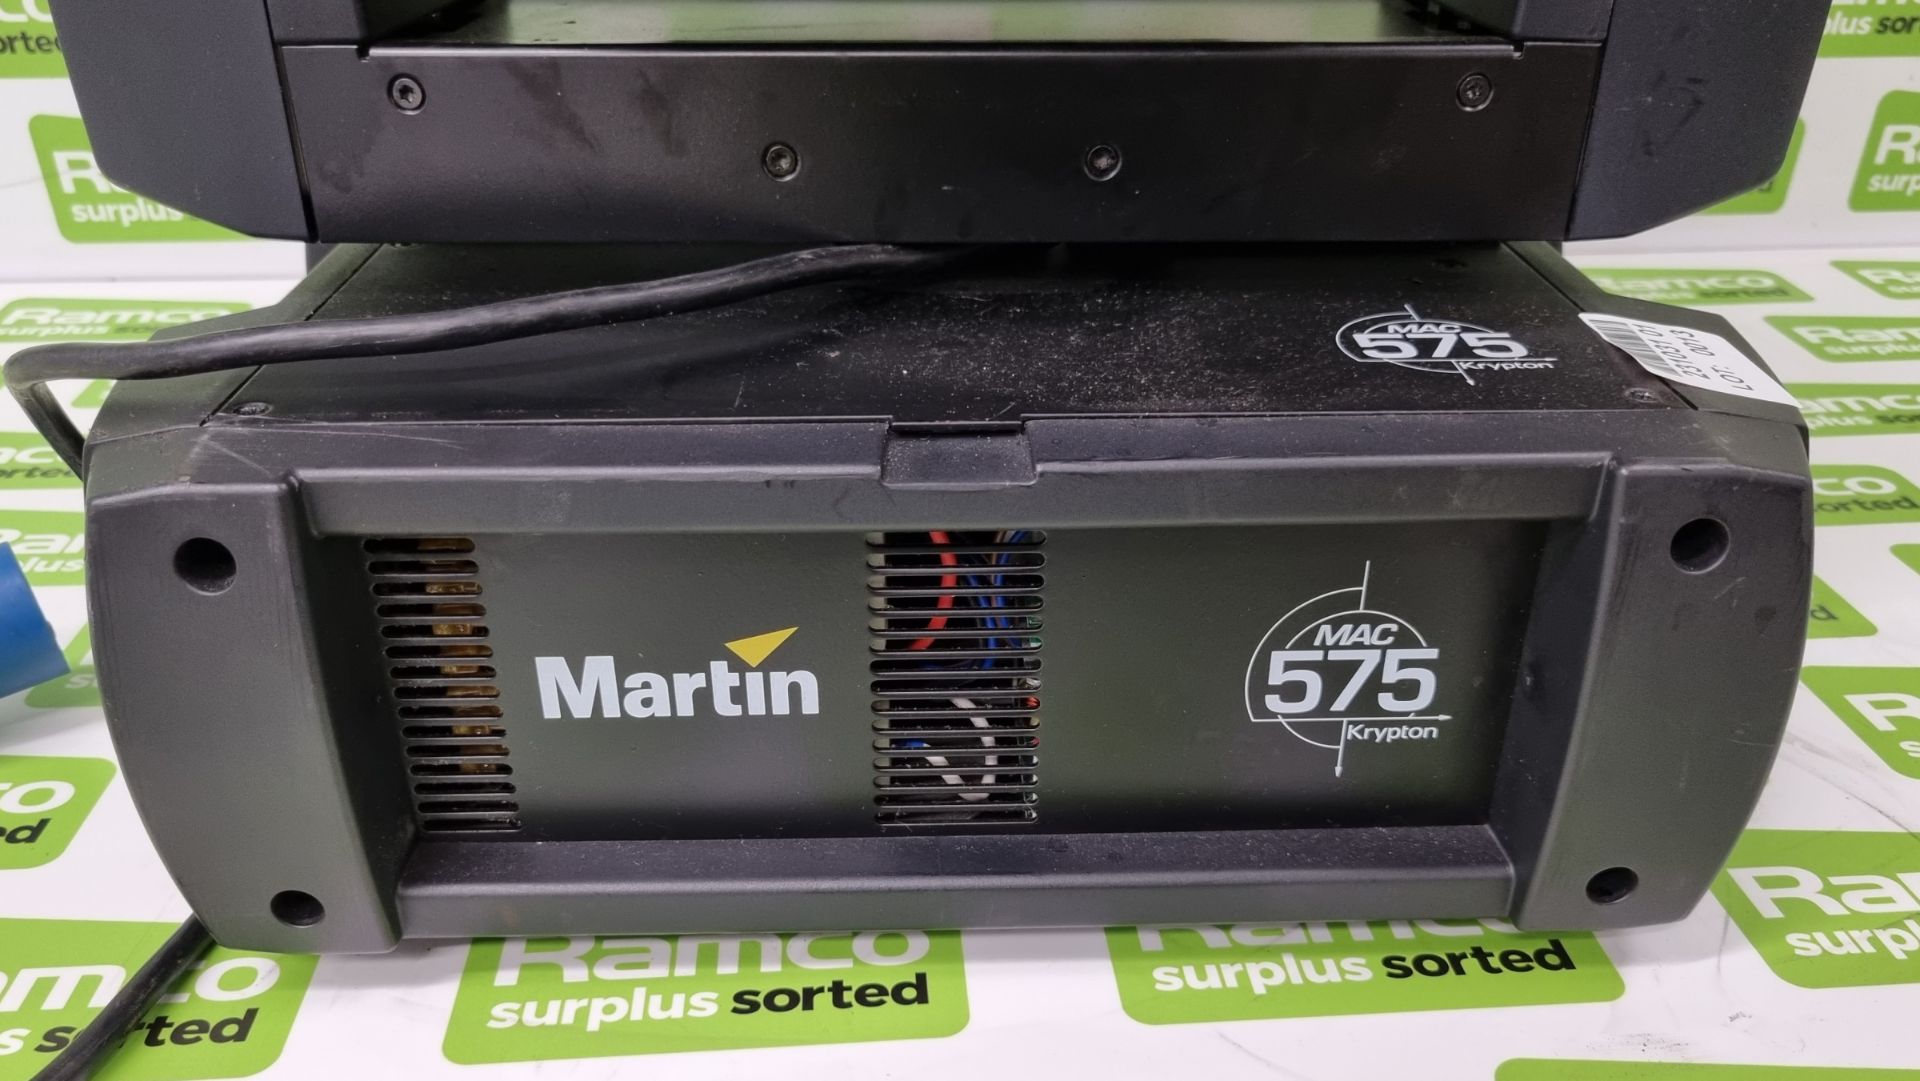 Martin Lighting MAC 575 Krypton 575 watt short-arc high-output discharge moving head spot lamp - Image 2 of 8